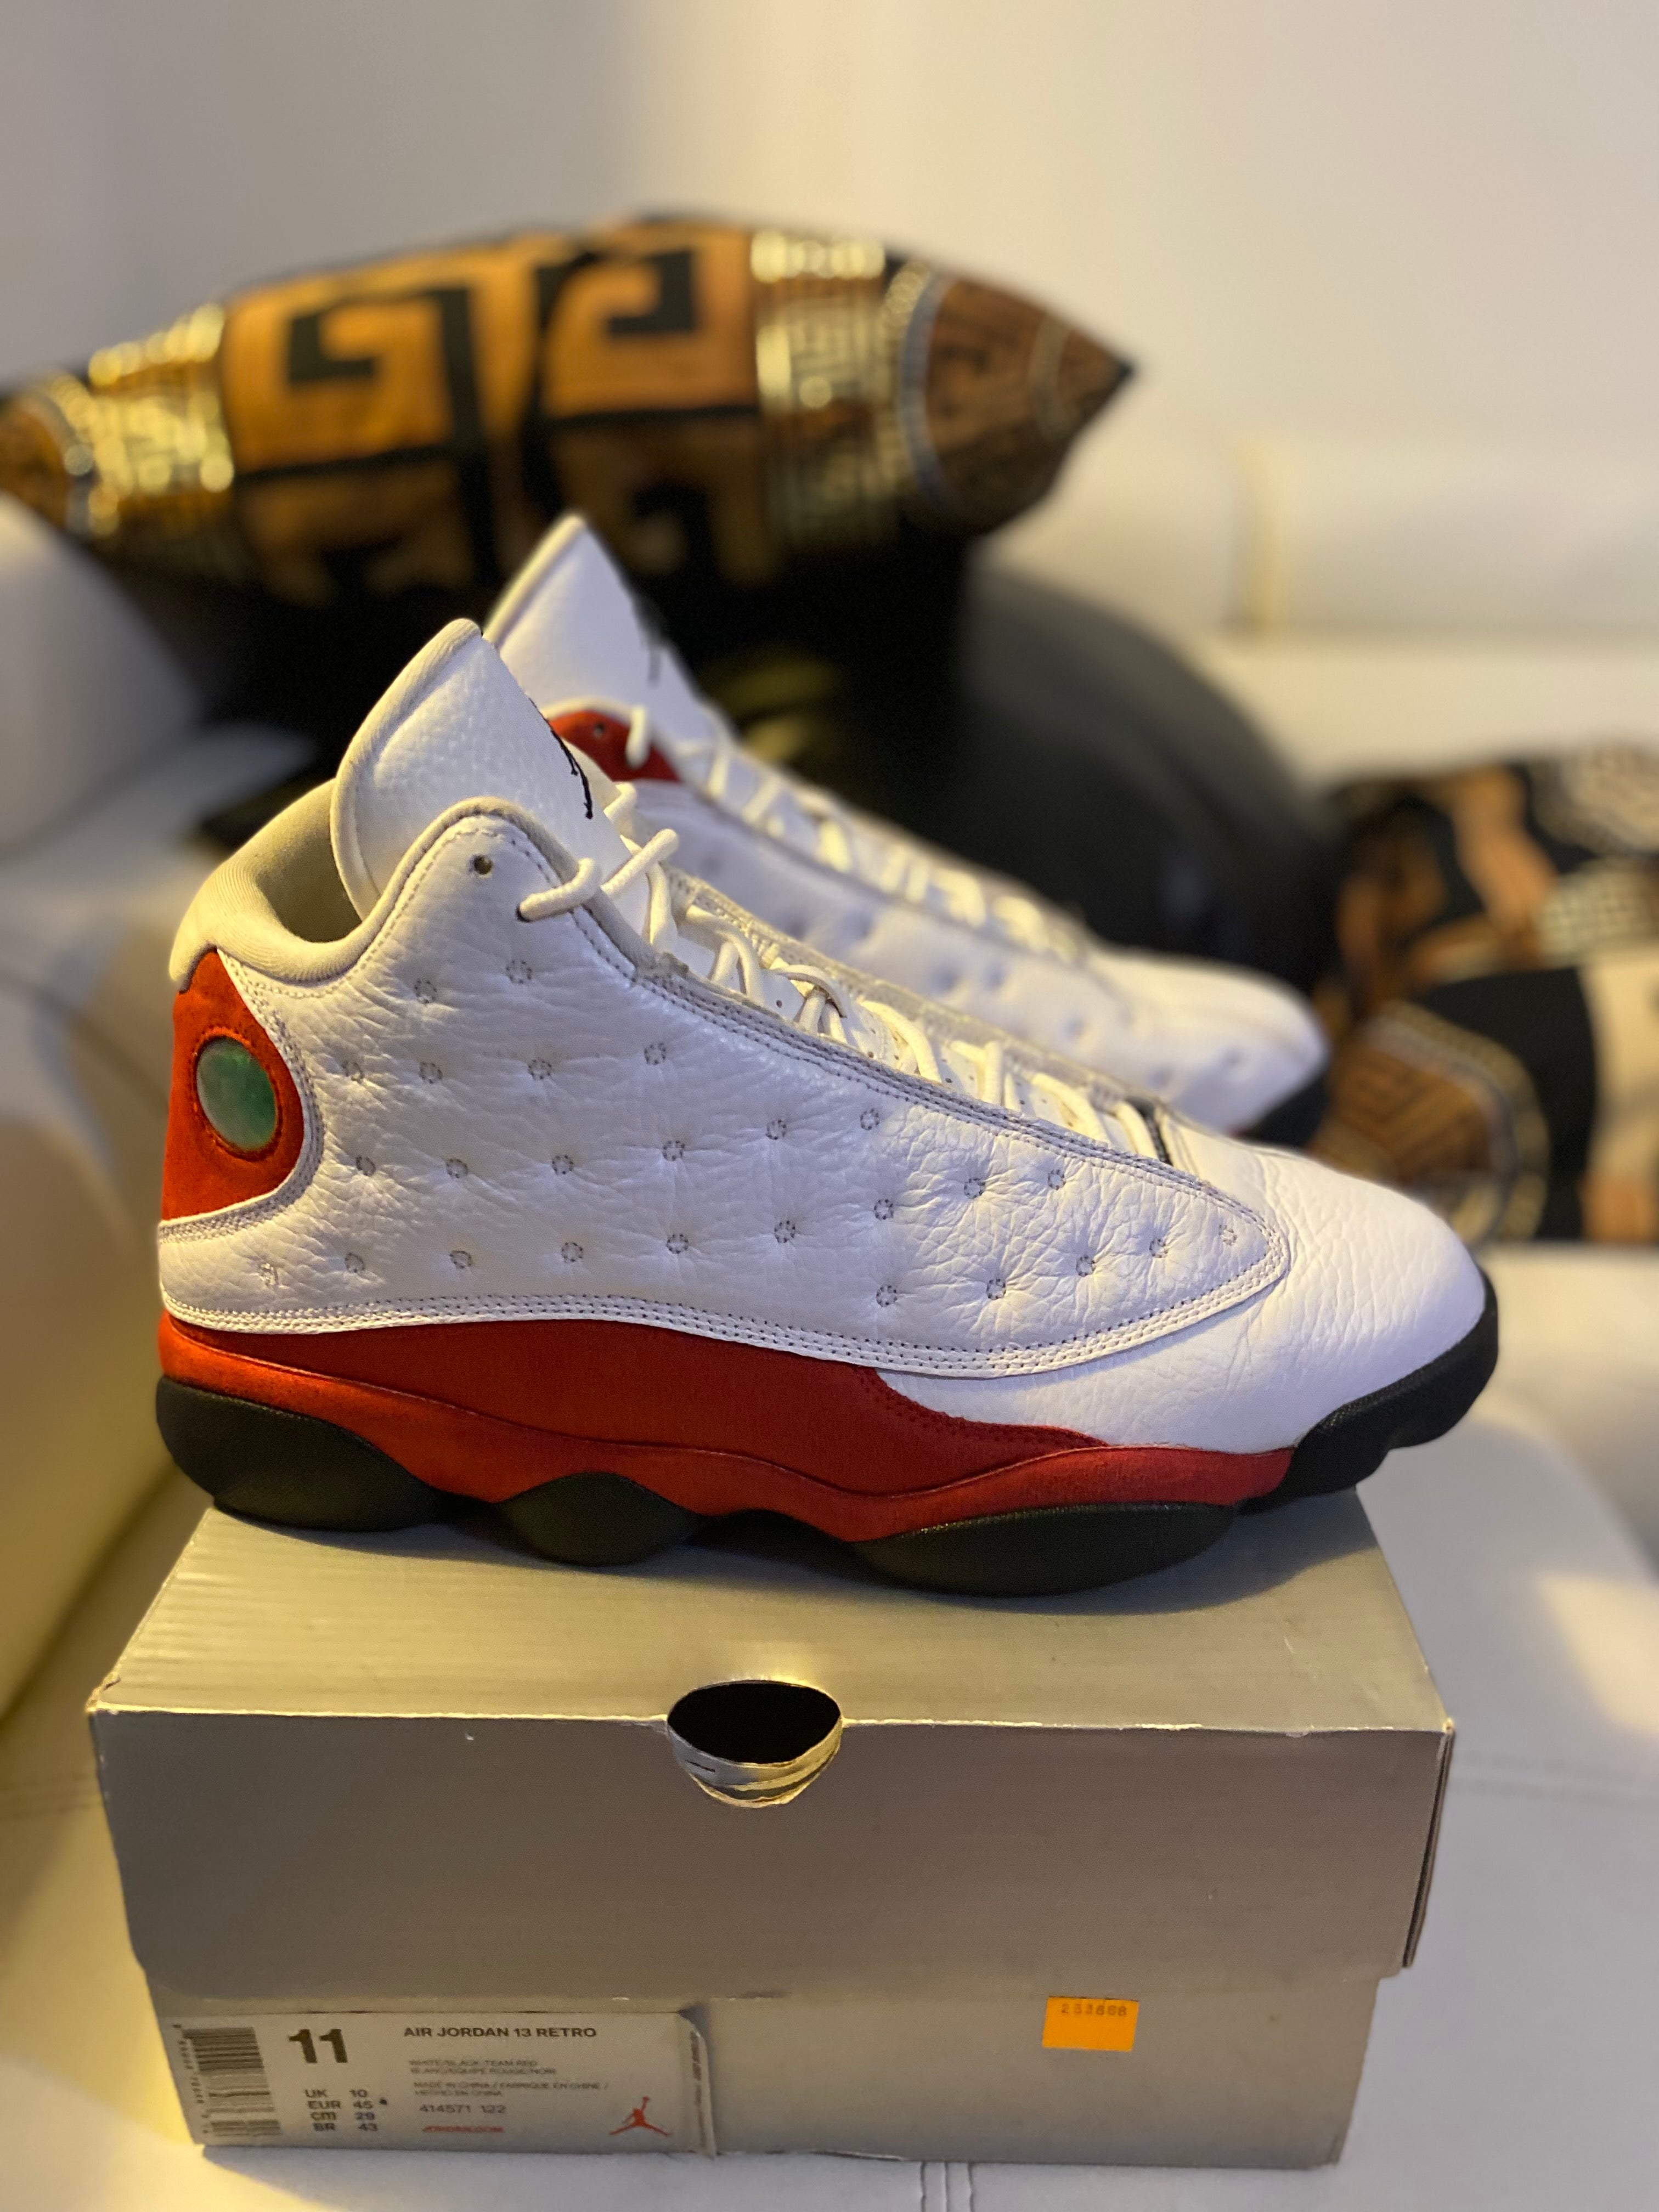 Nike Mens Air Jordan 13 Retro Chicago White/Black-Red 414571-122 